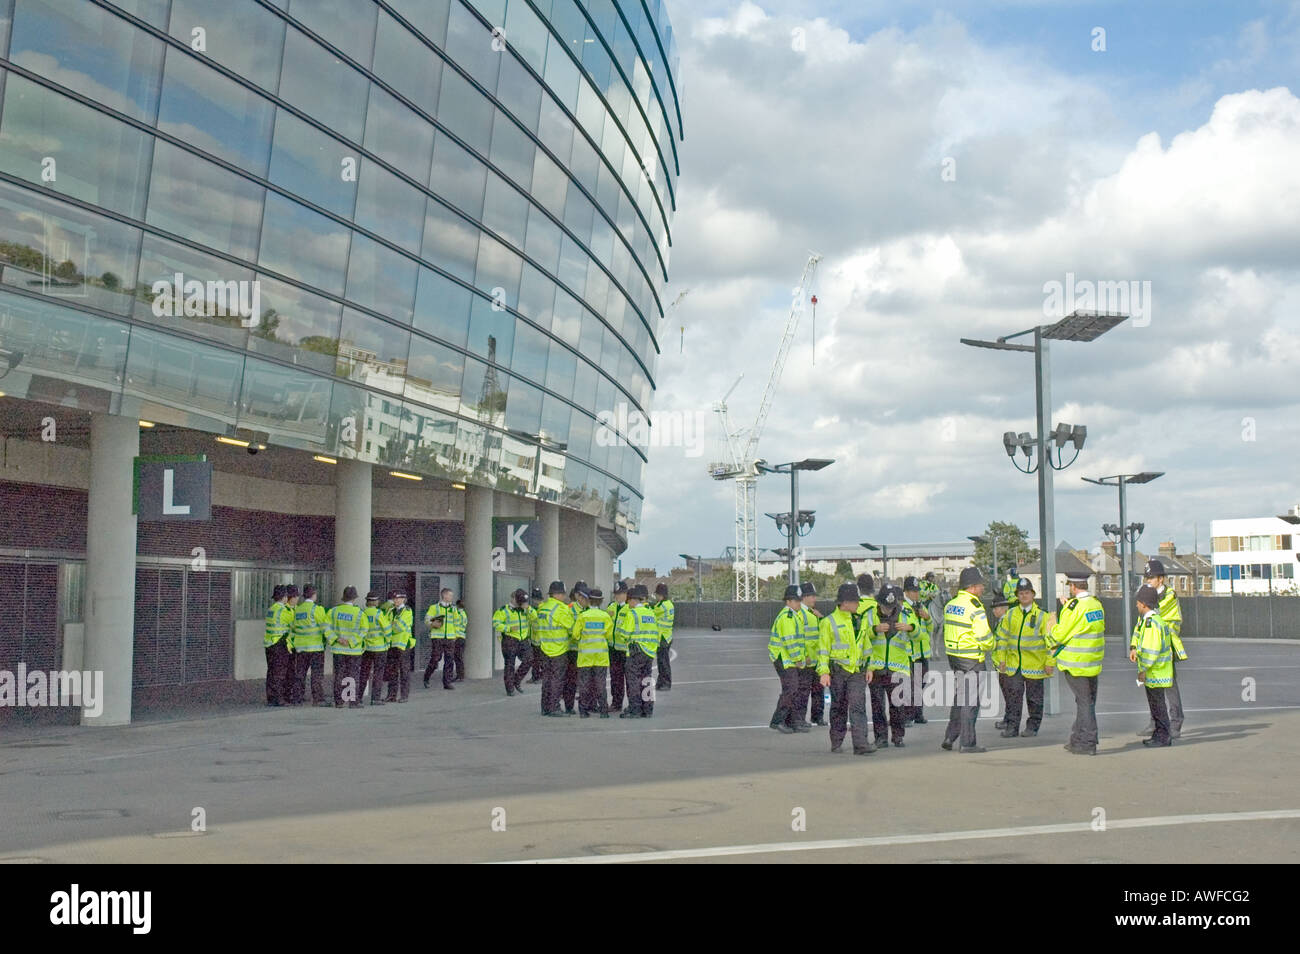 Police being briefed on the podium of Arsenal's stadium Holloway London UK Stock Photo